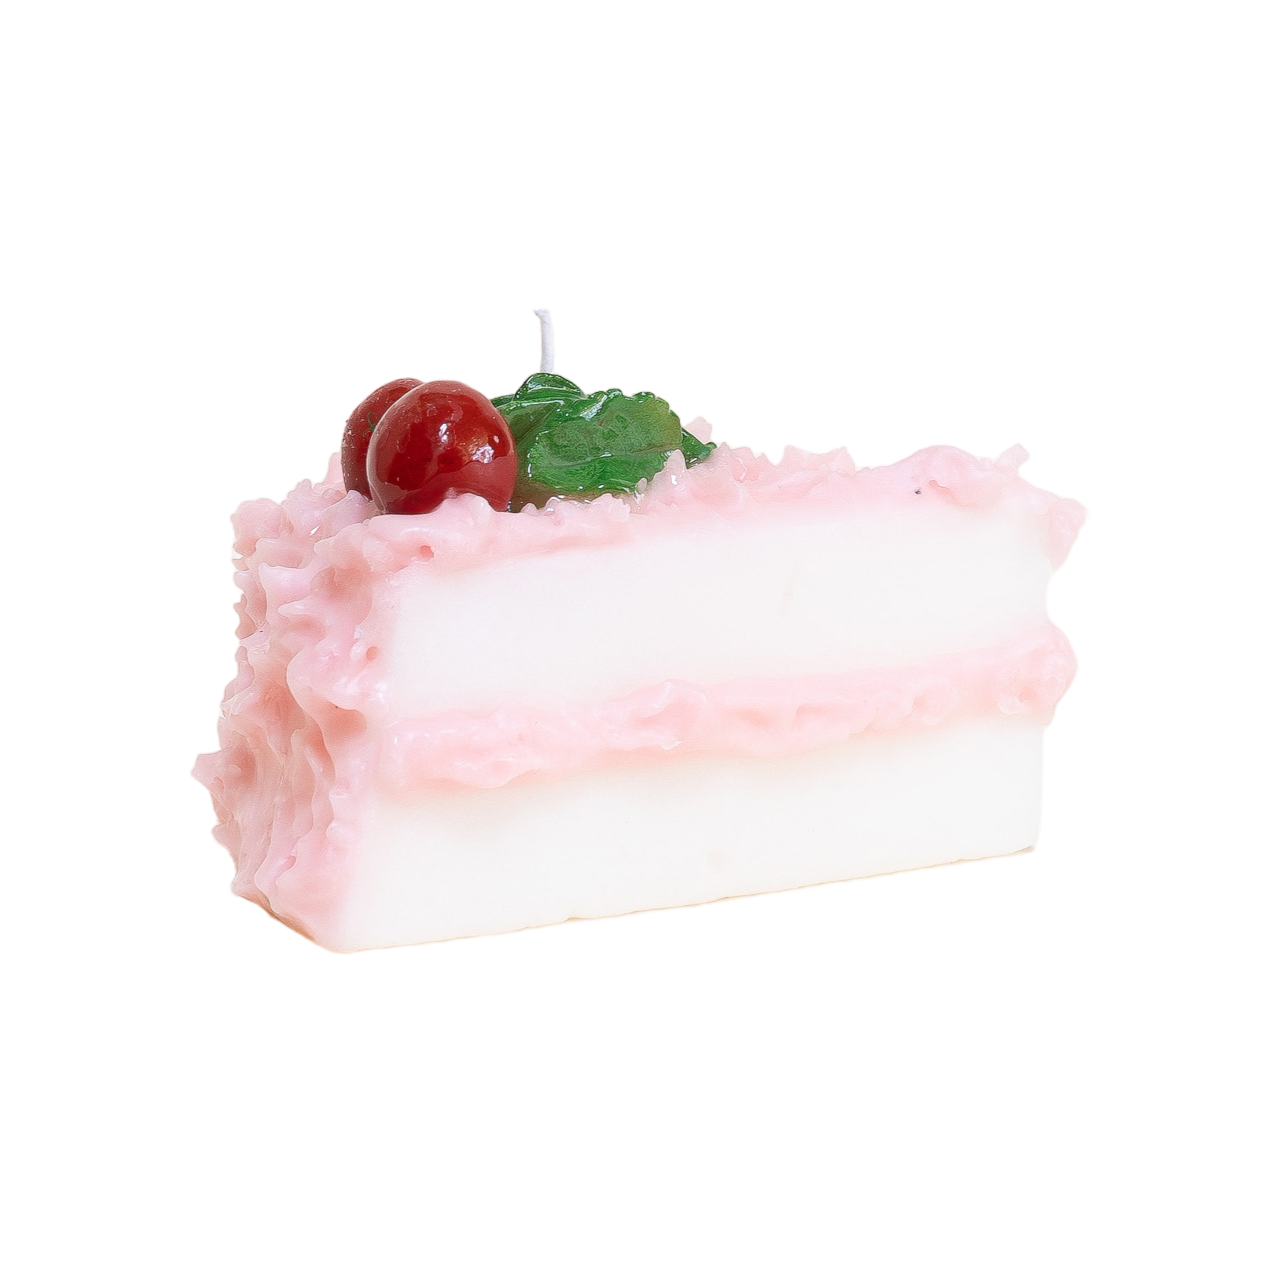 Cherry Cake Slice - Italian Food Candle